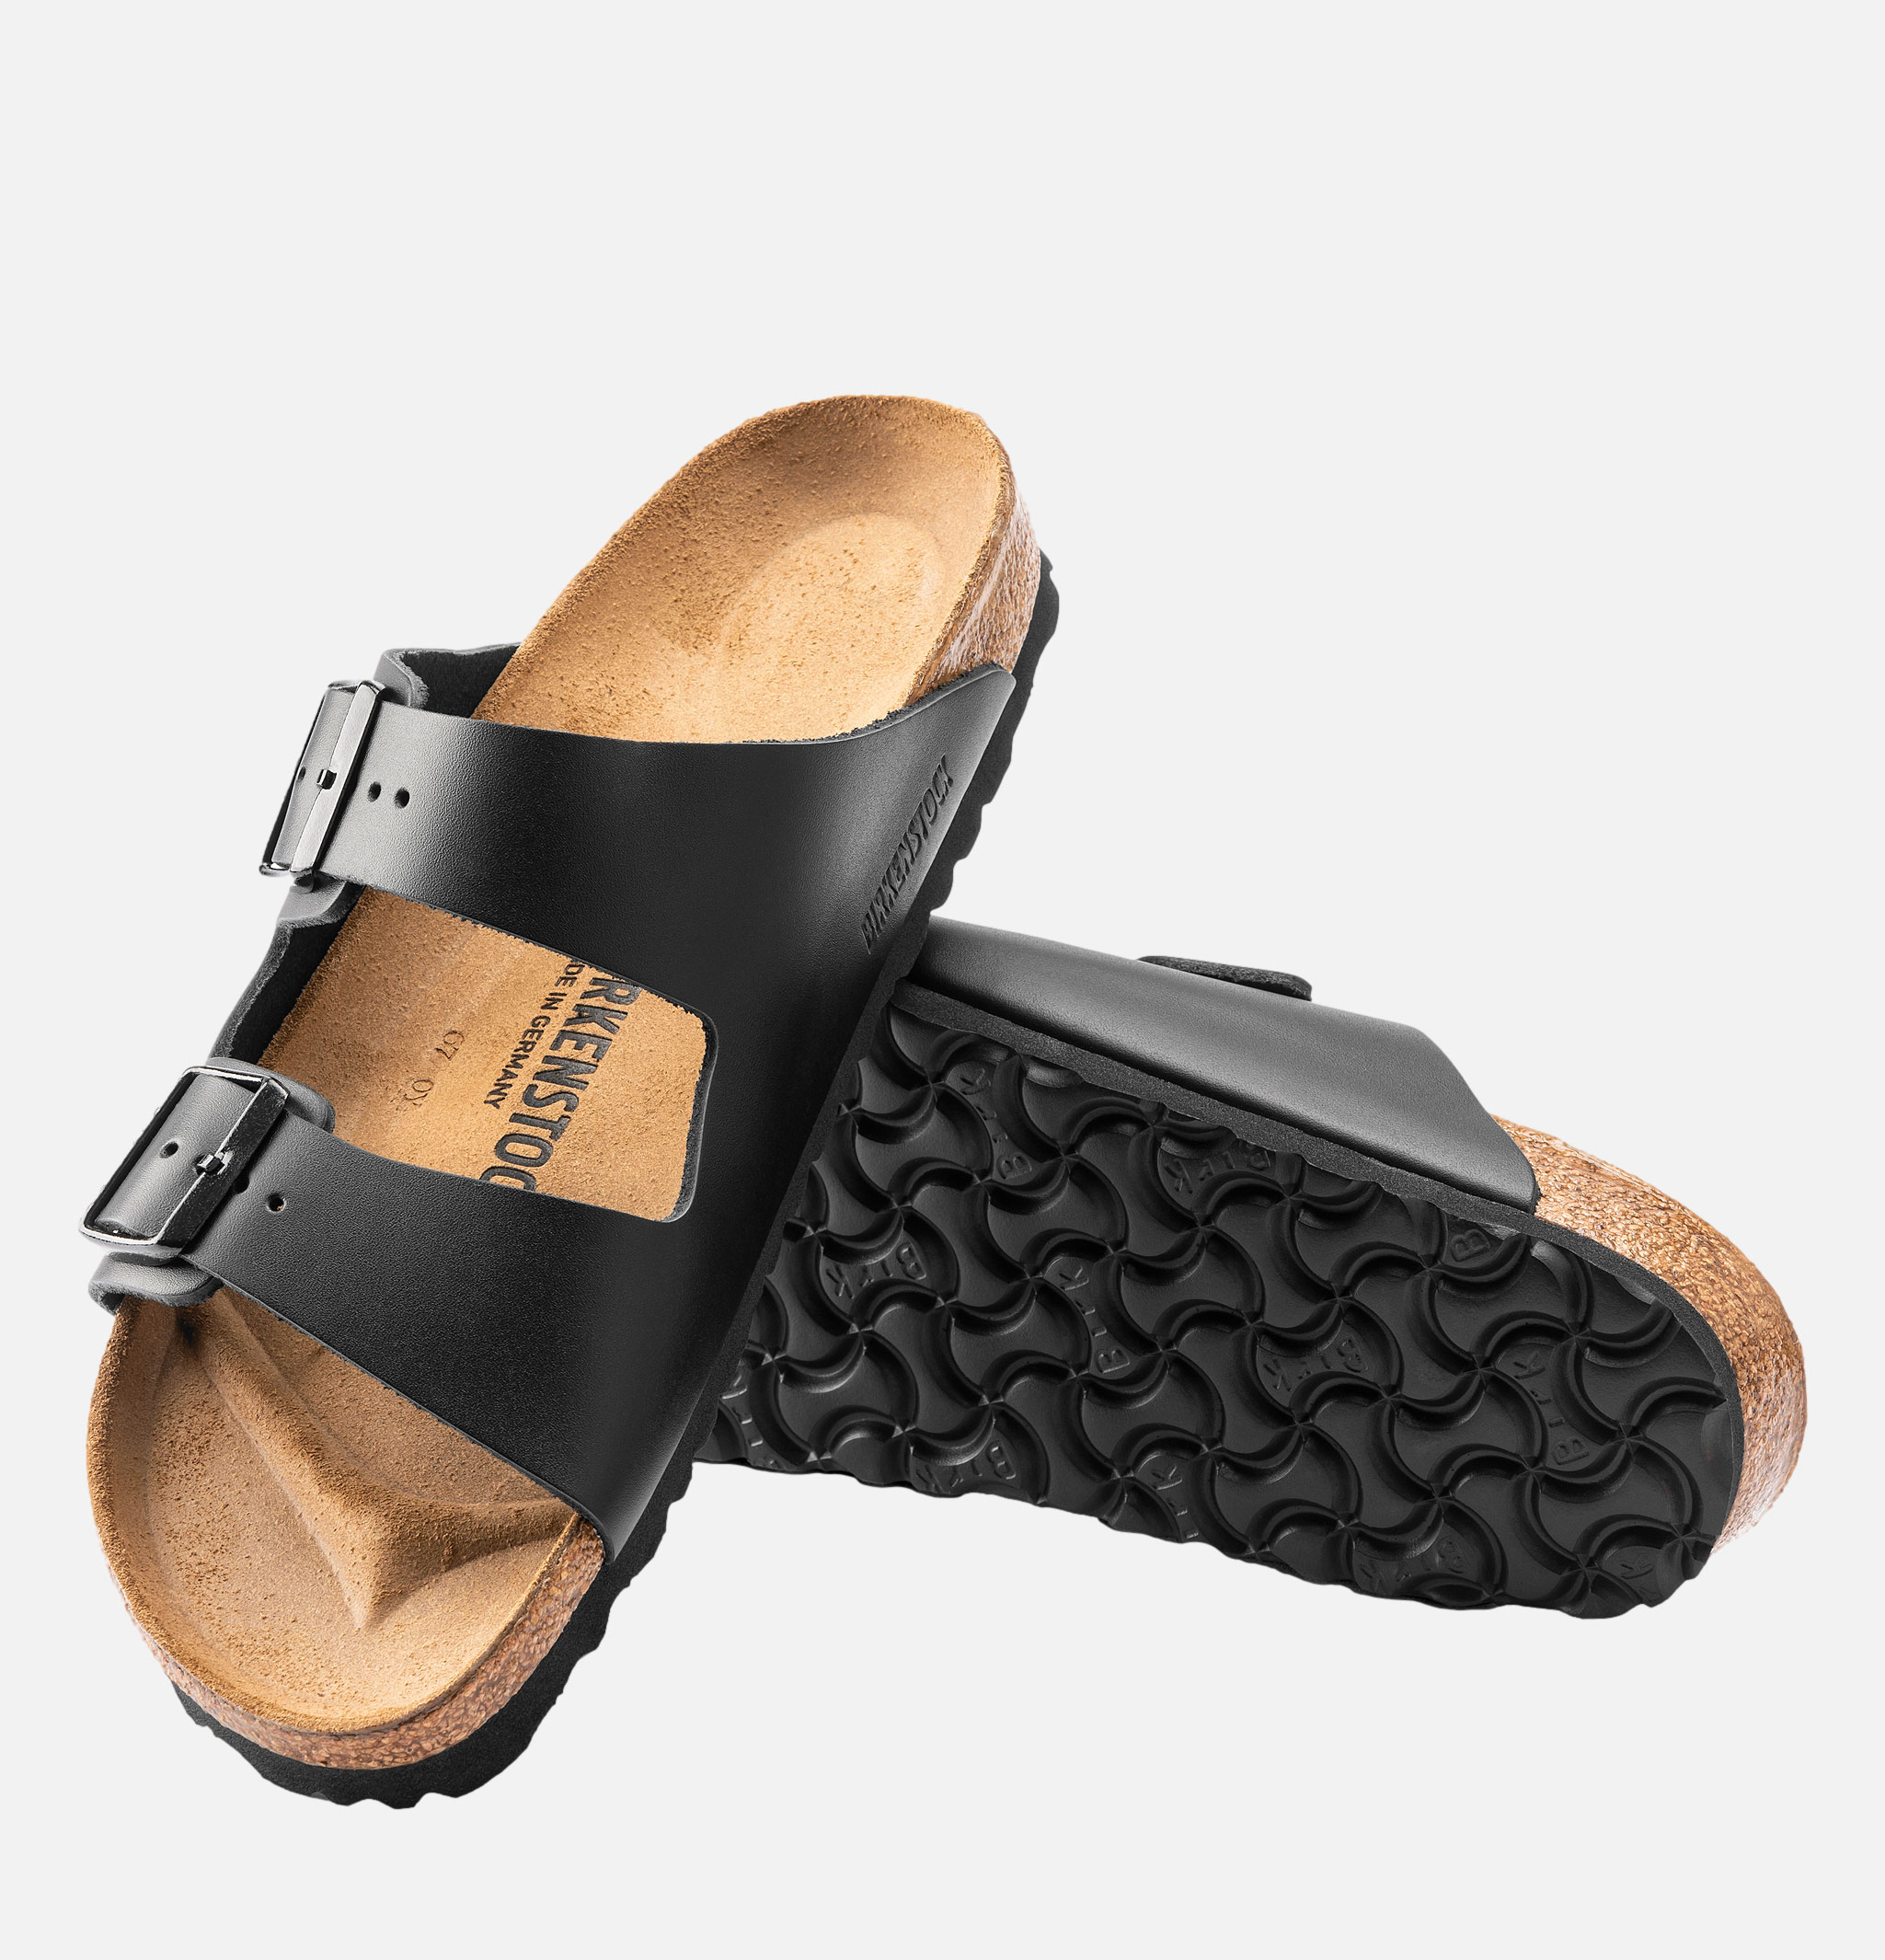 Arizona Sandals Black Leather